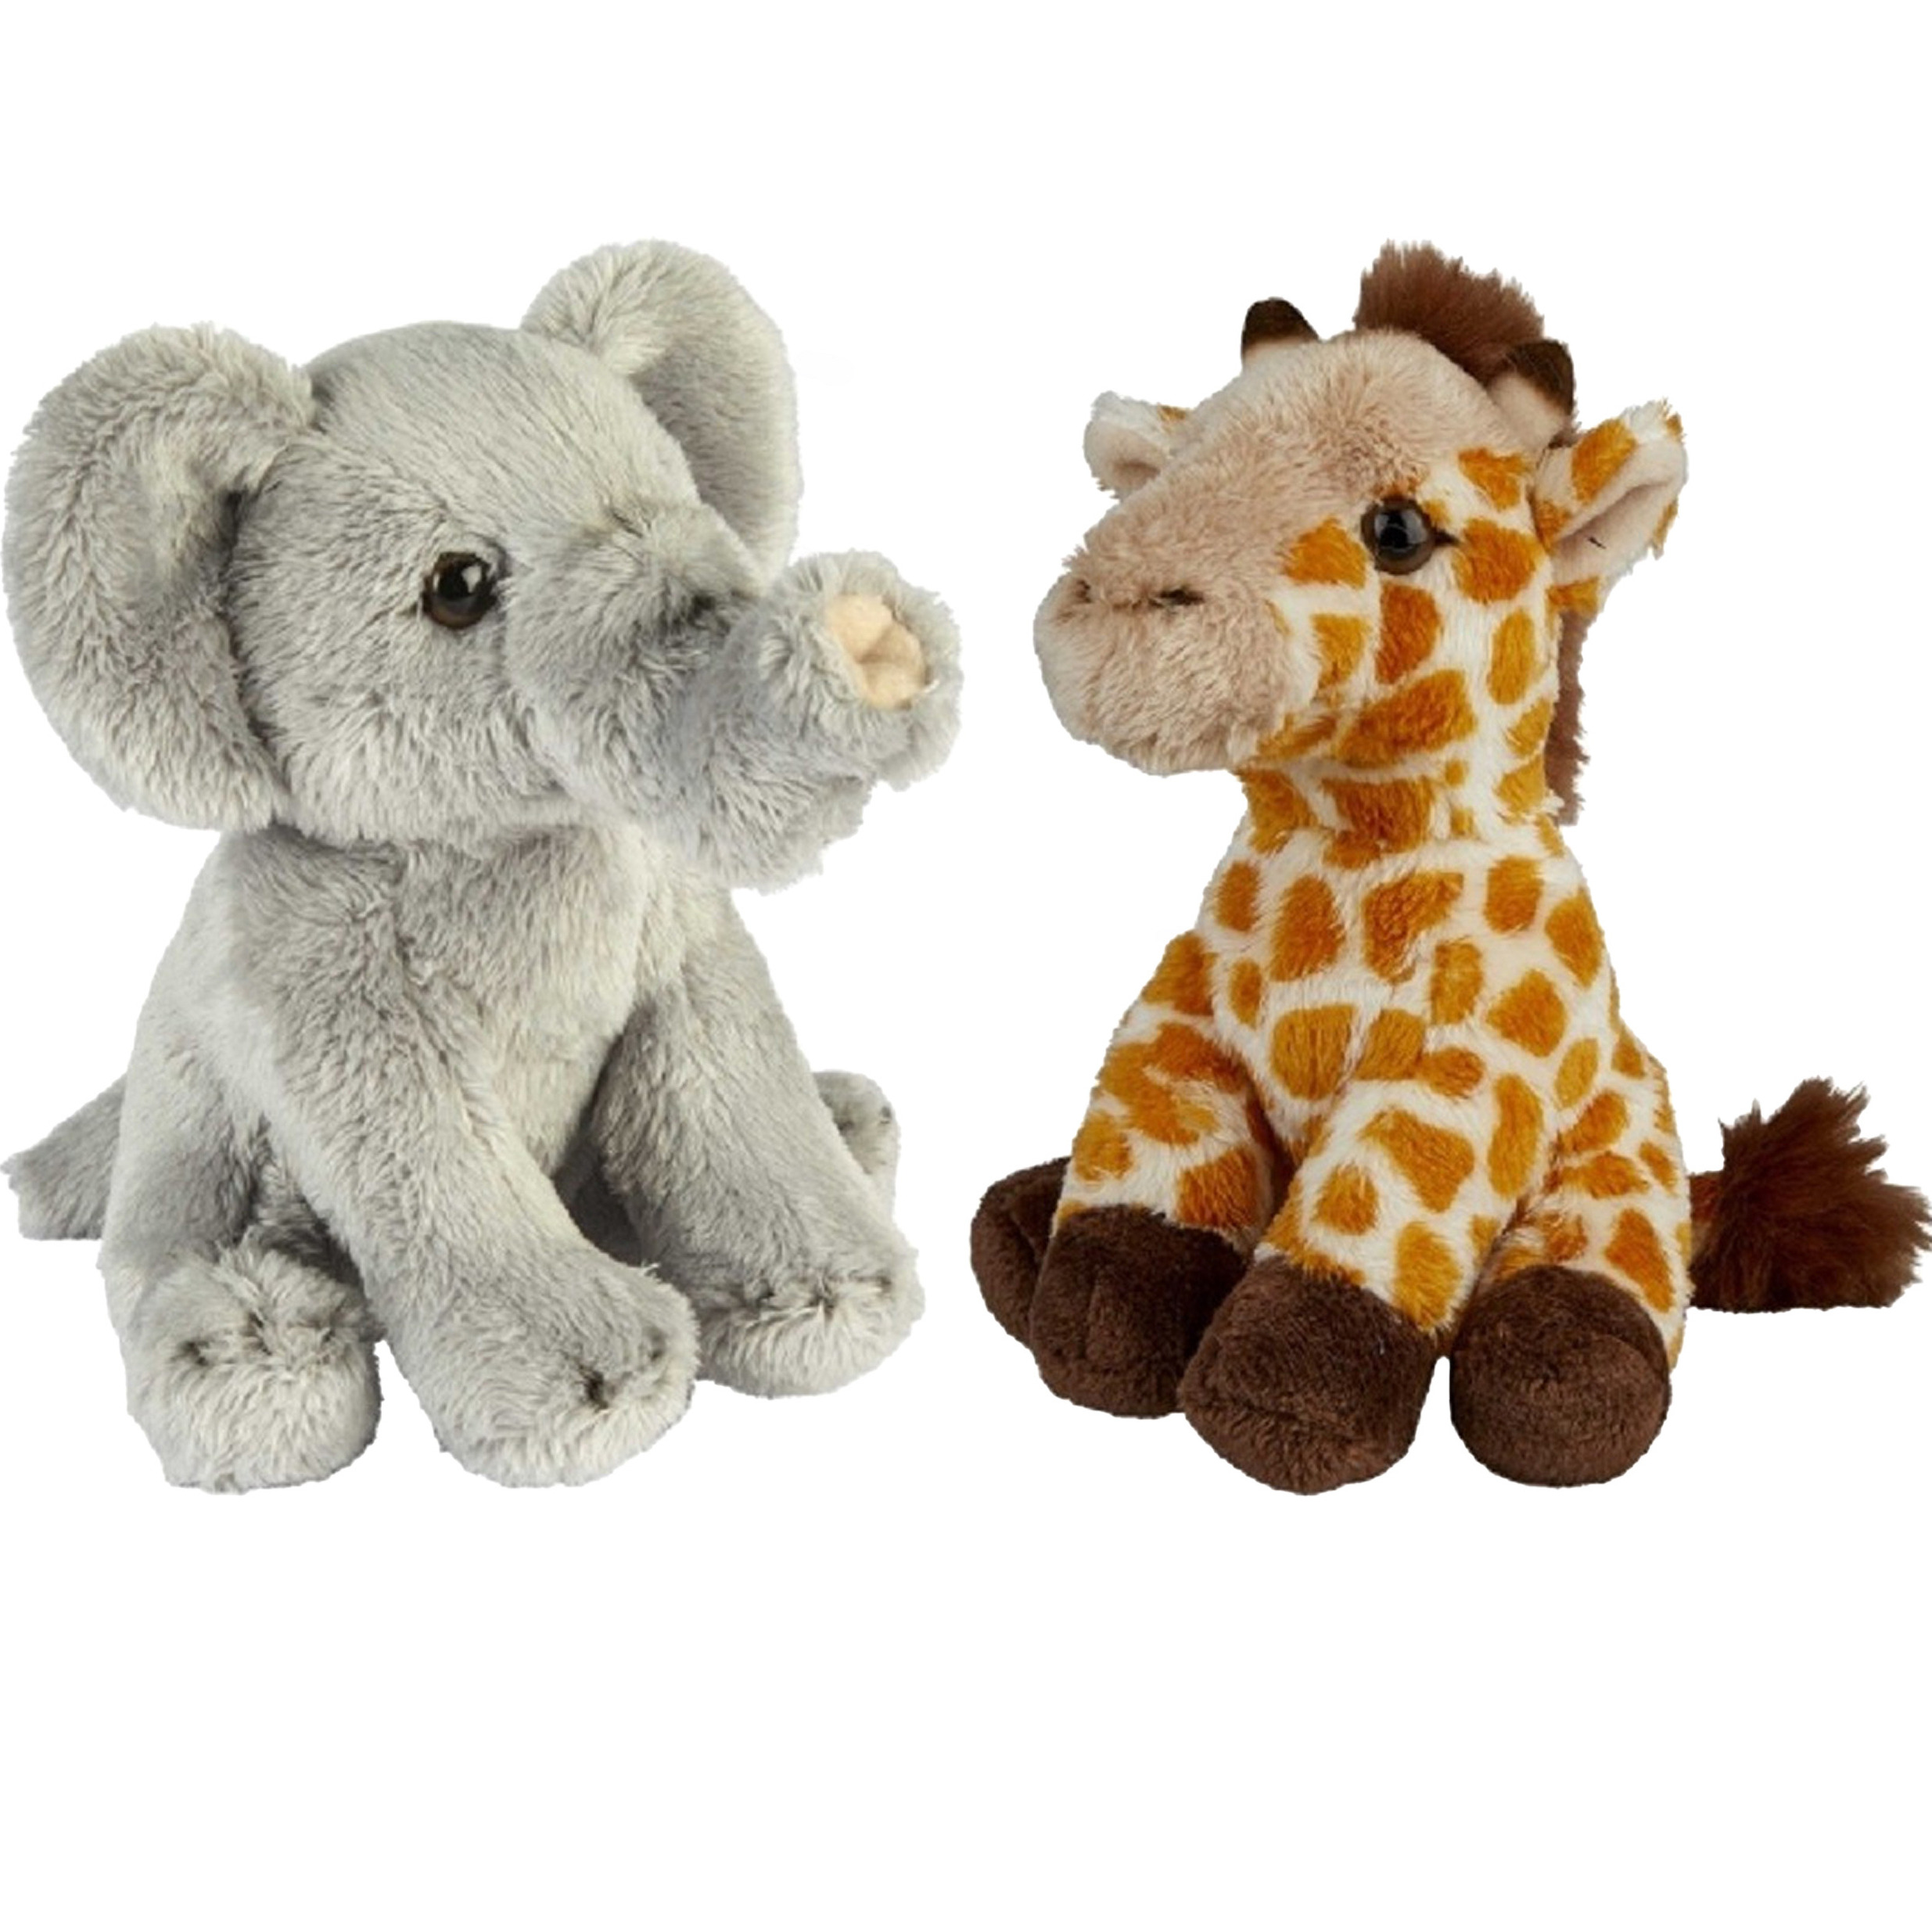 Safari dieren serie pluche knuffels 2x stuks Olifant en Giraffe van 15 cm